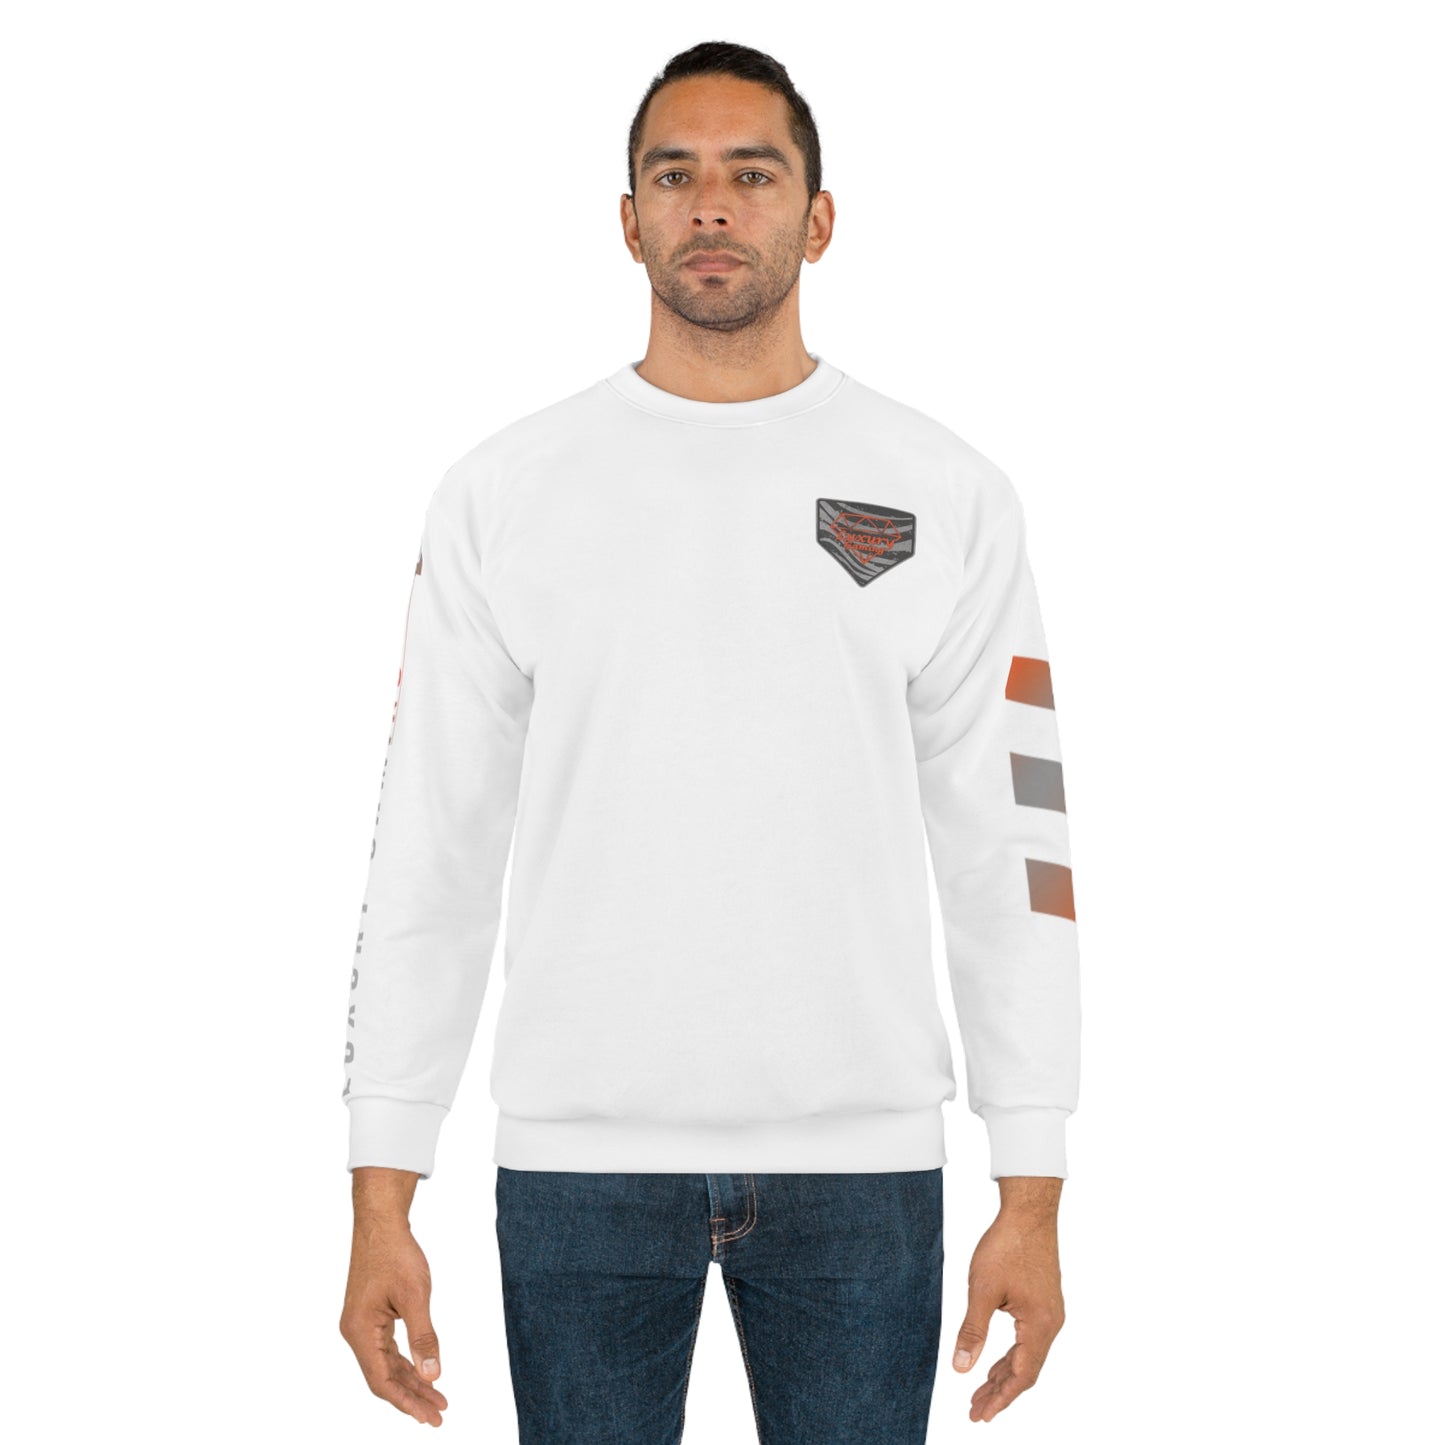 ""Vivid Pursuit:: Luxury Gaming's White & Orange Unisex Sweatshirt"